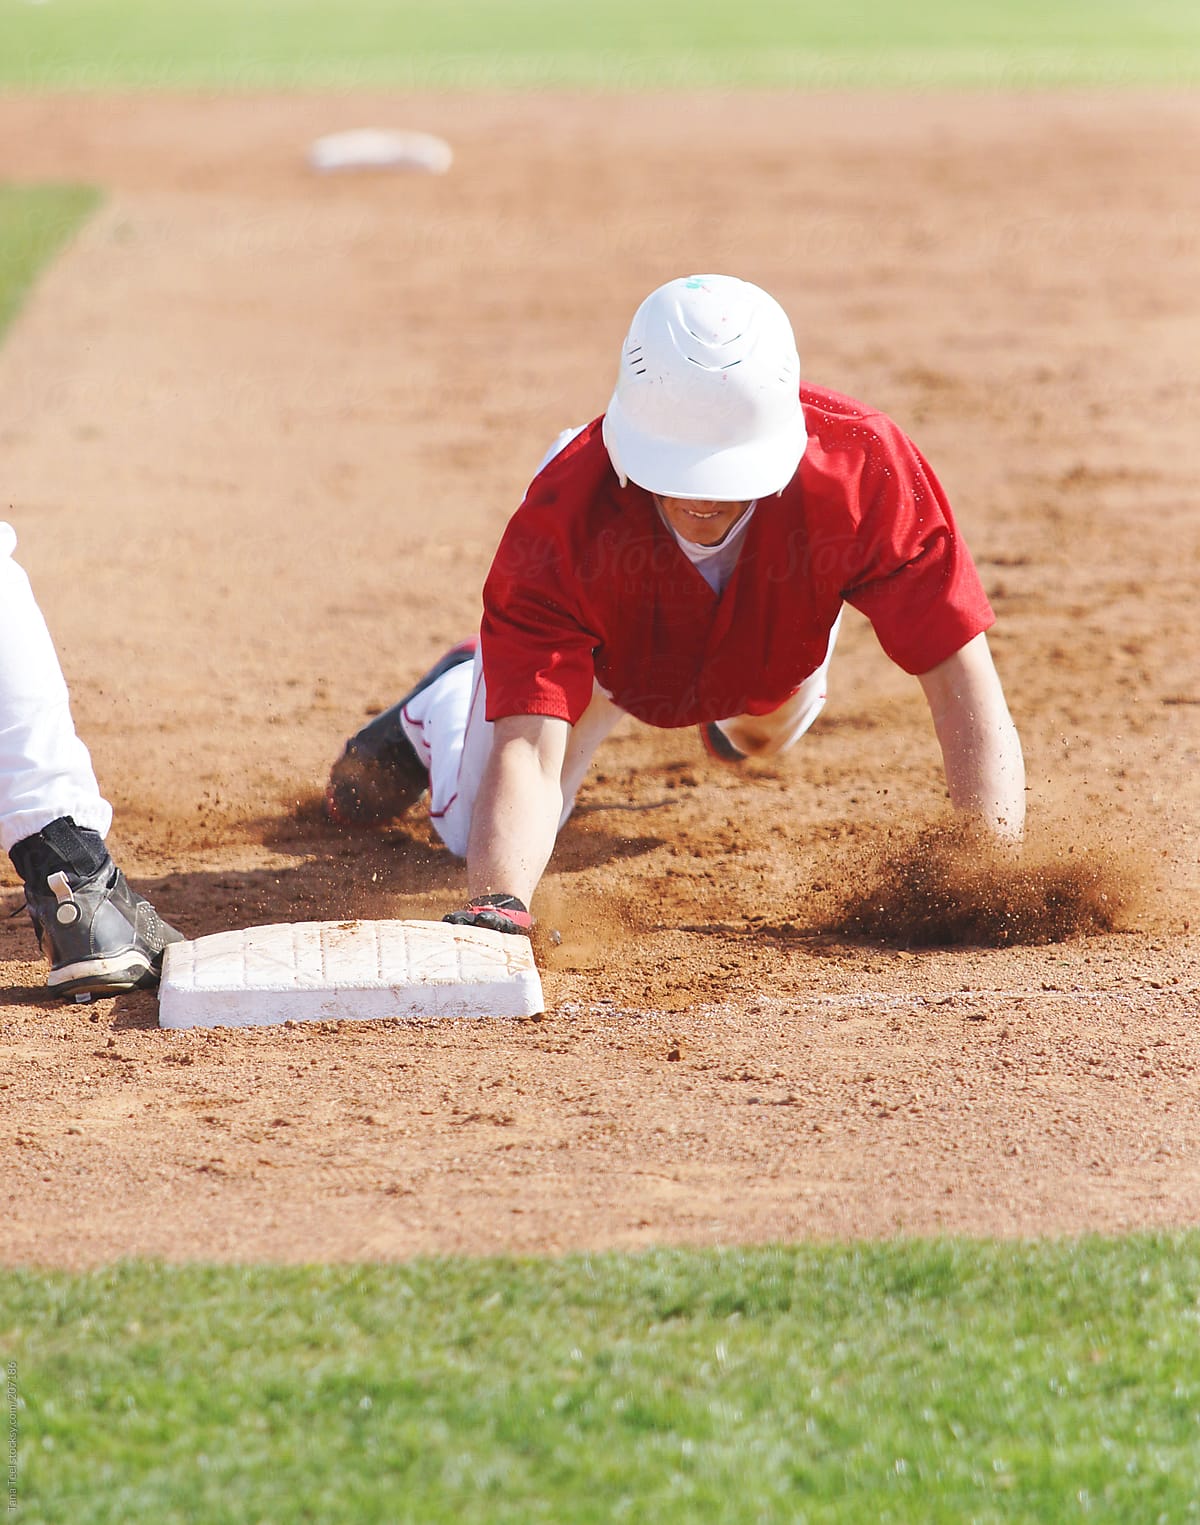 A baseball player sliding back to first base